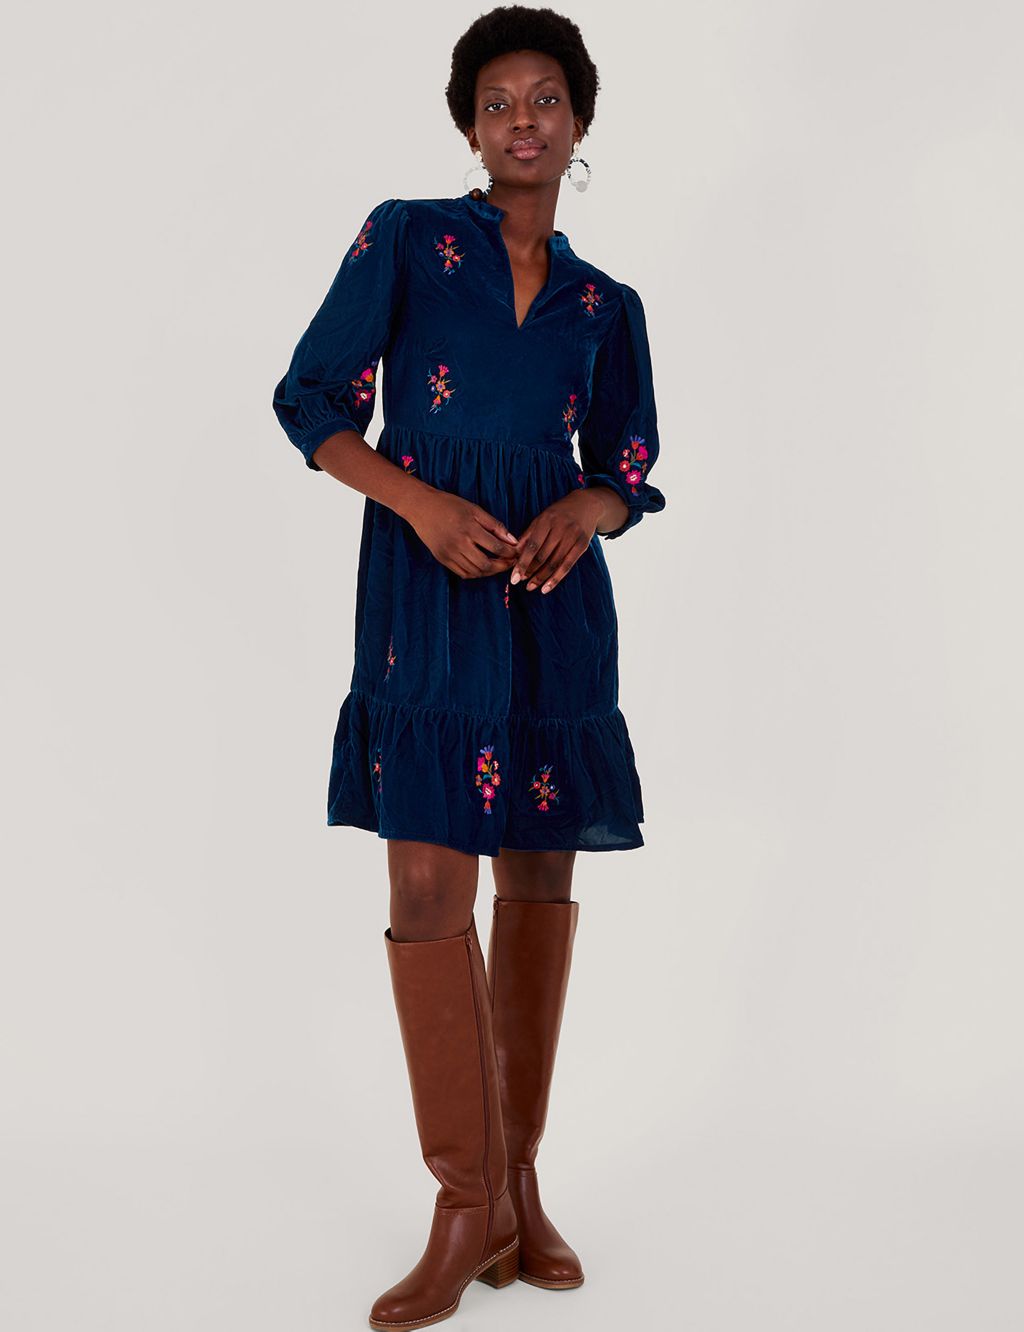 Velvet Embroidered Knee Length Tiered Dress image 1